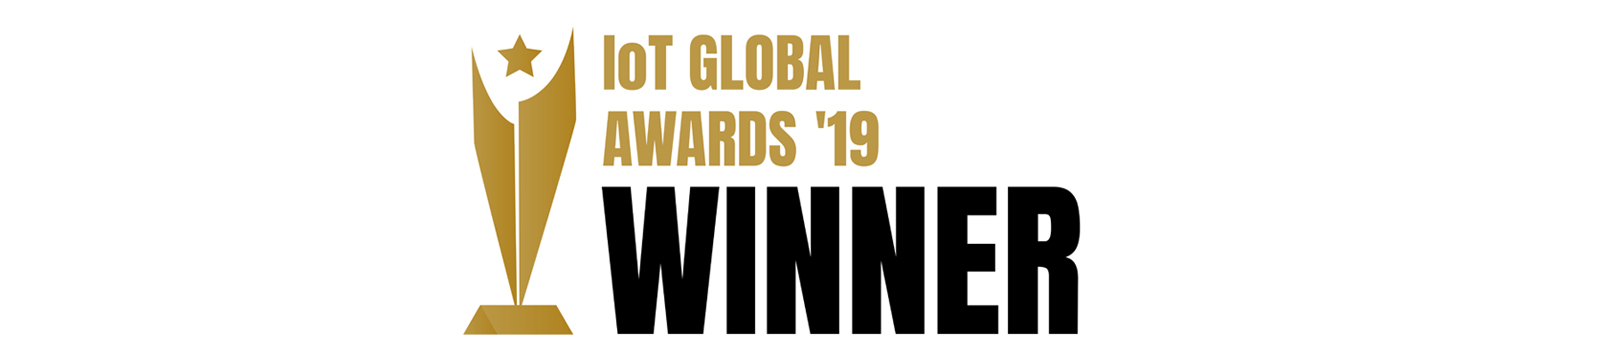 iot global award 2019